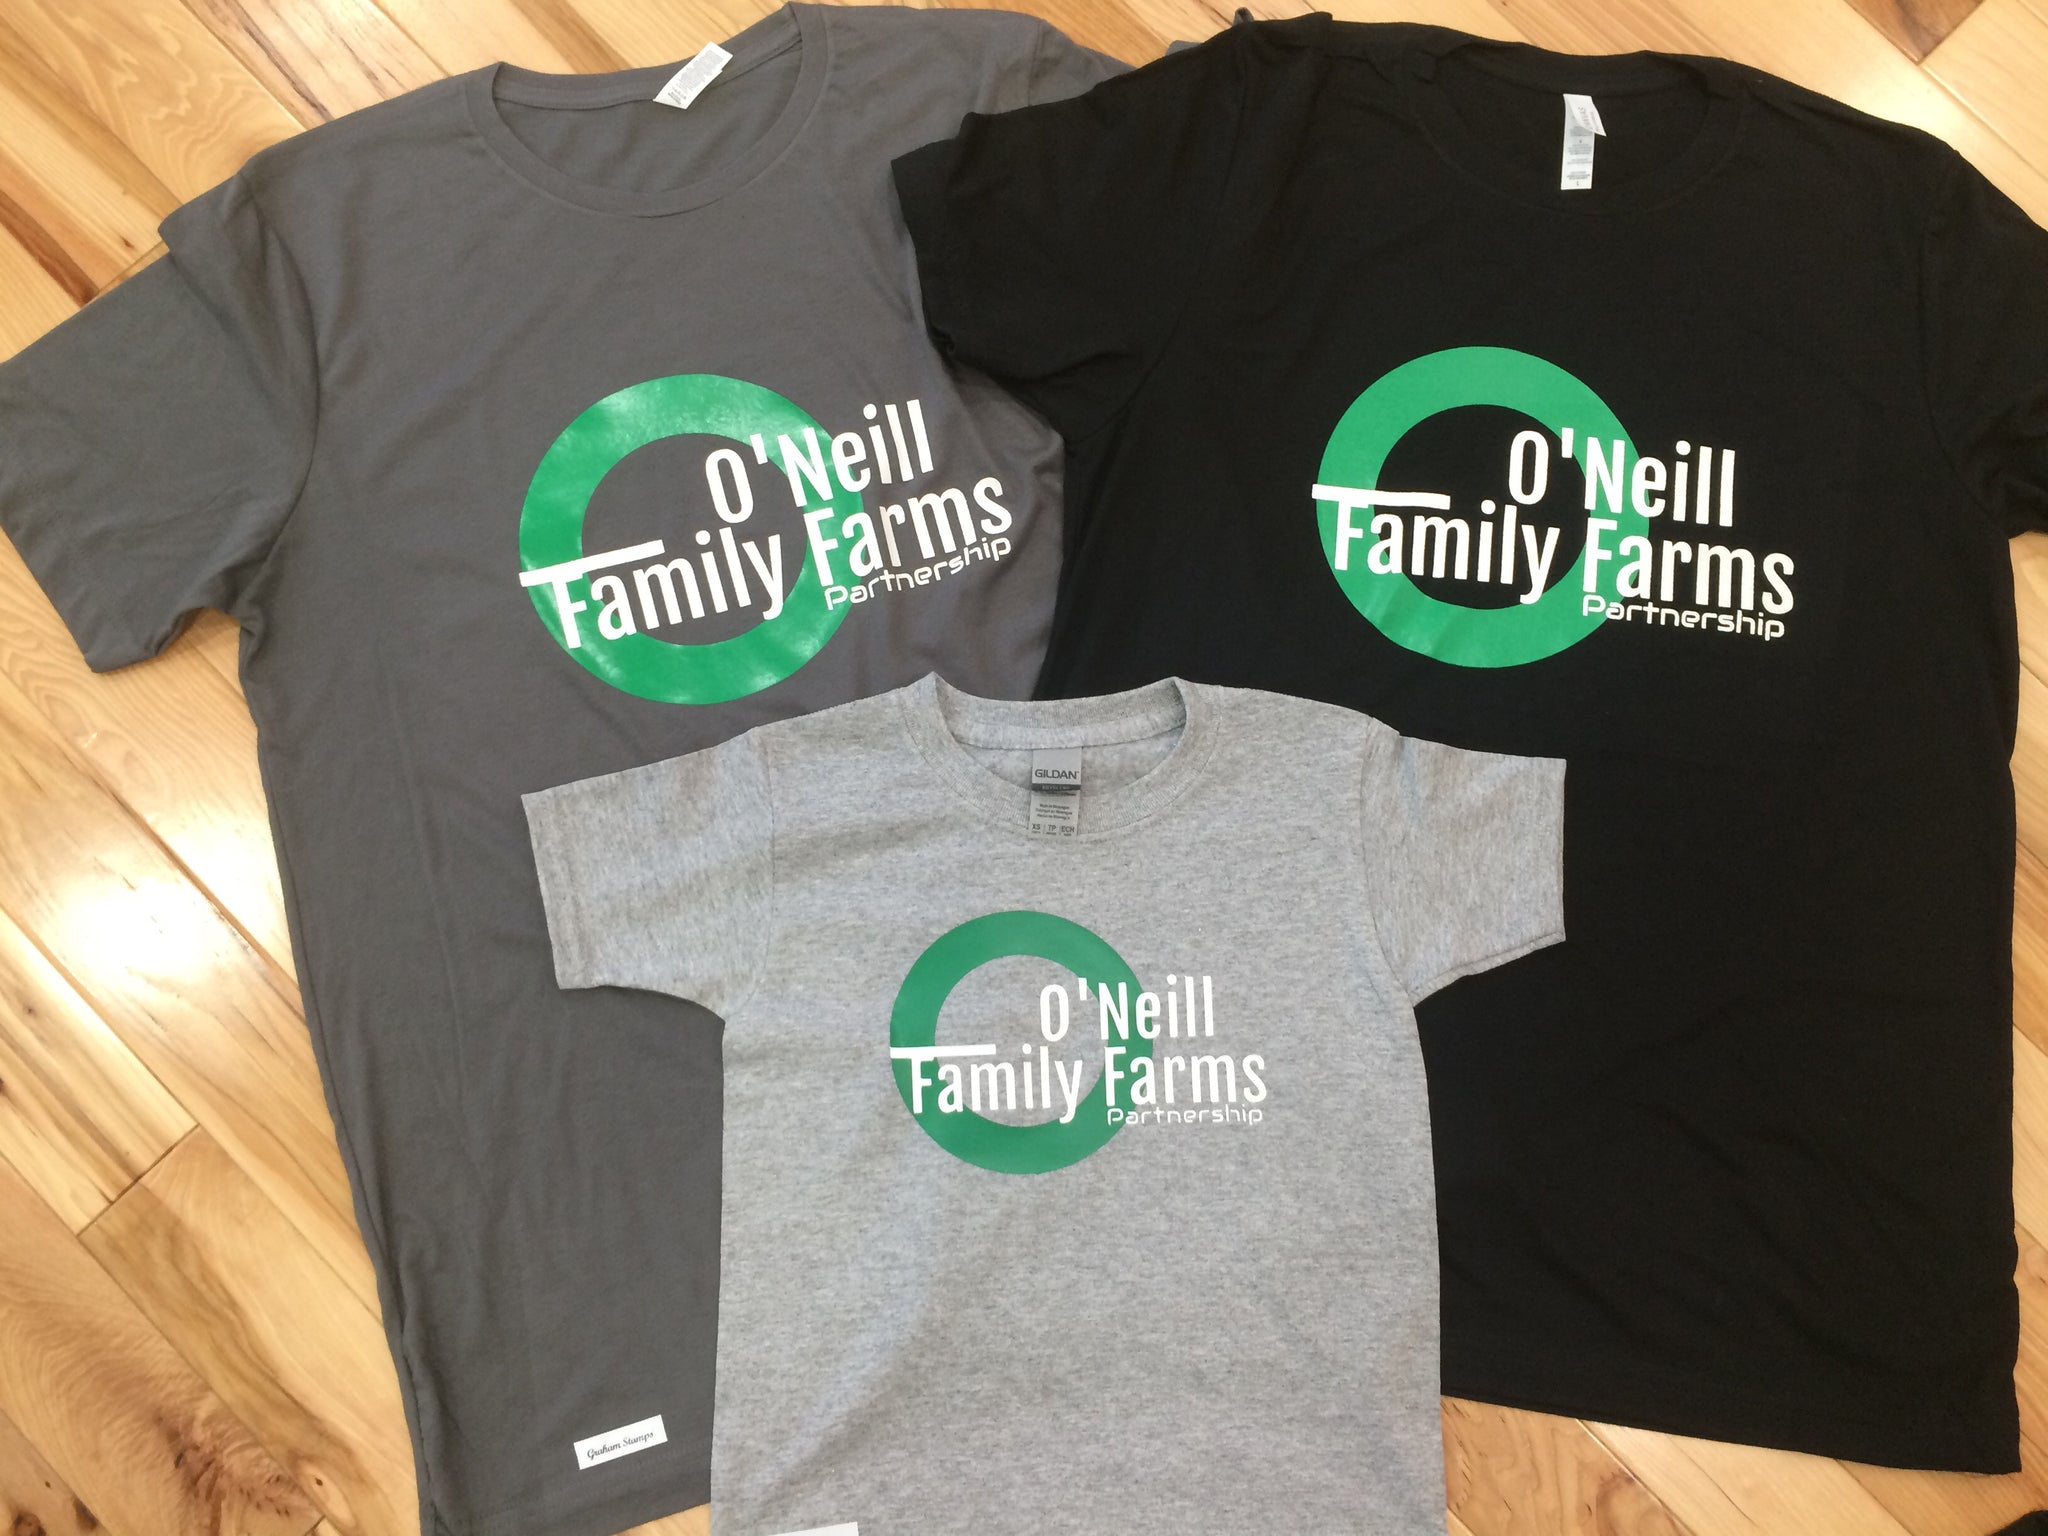 O'Neill Family Farms Partnership